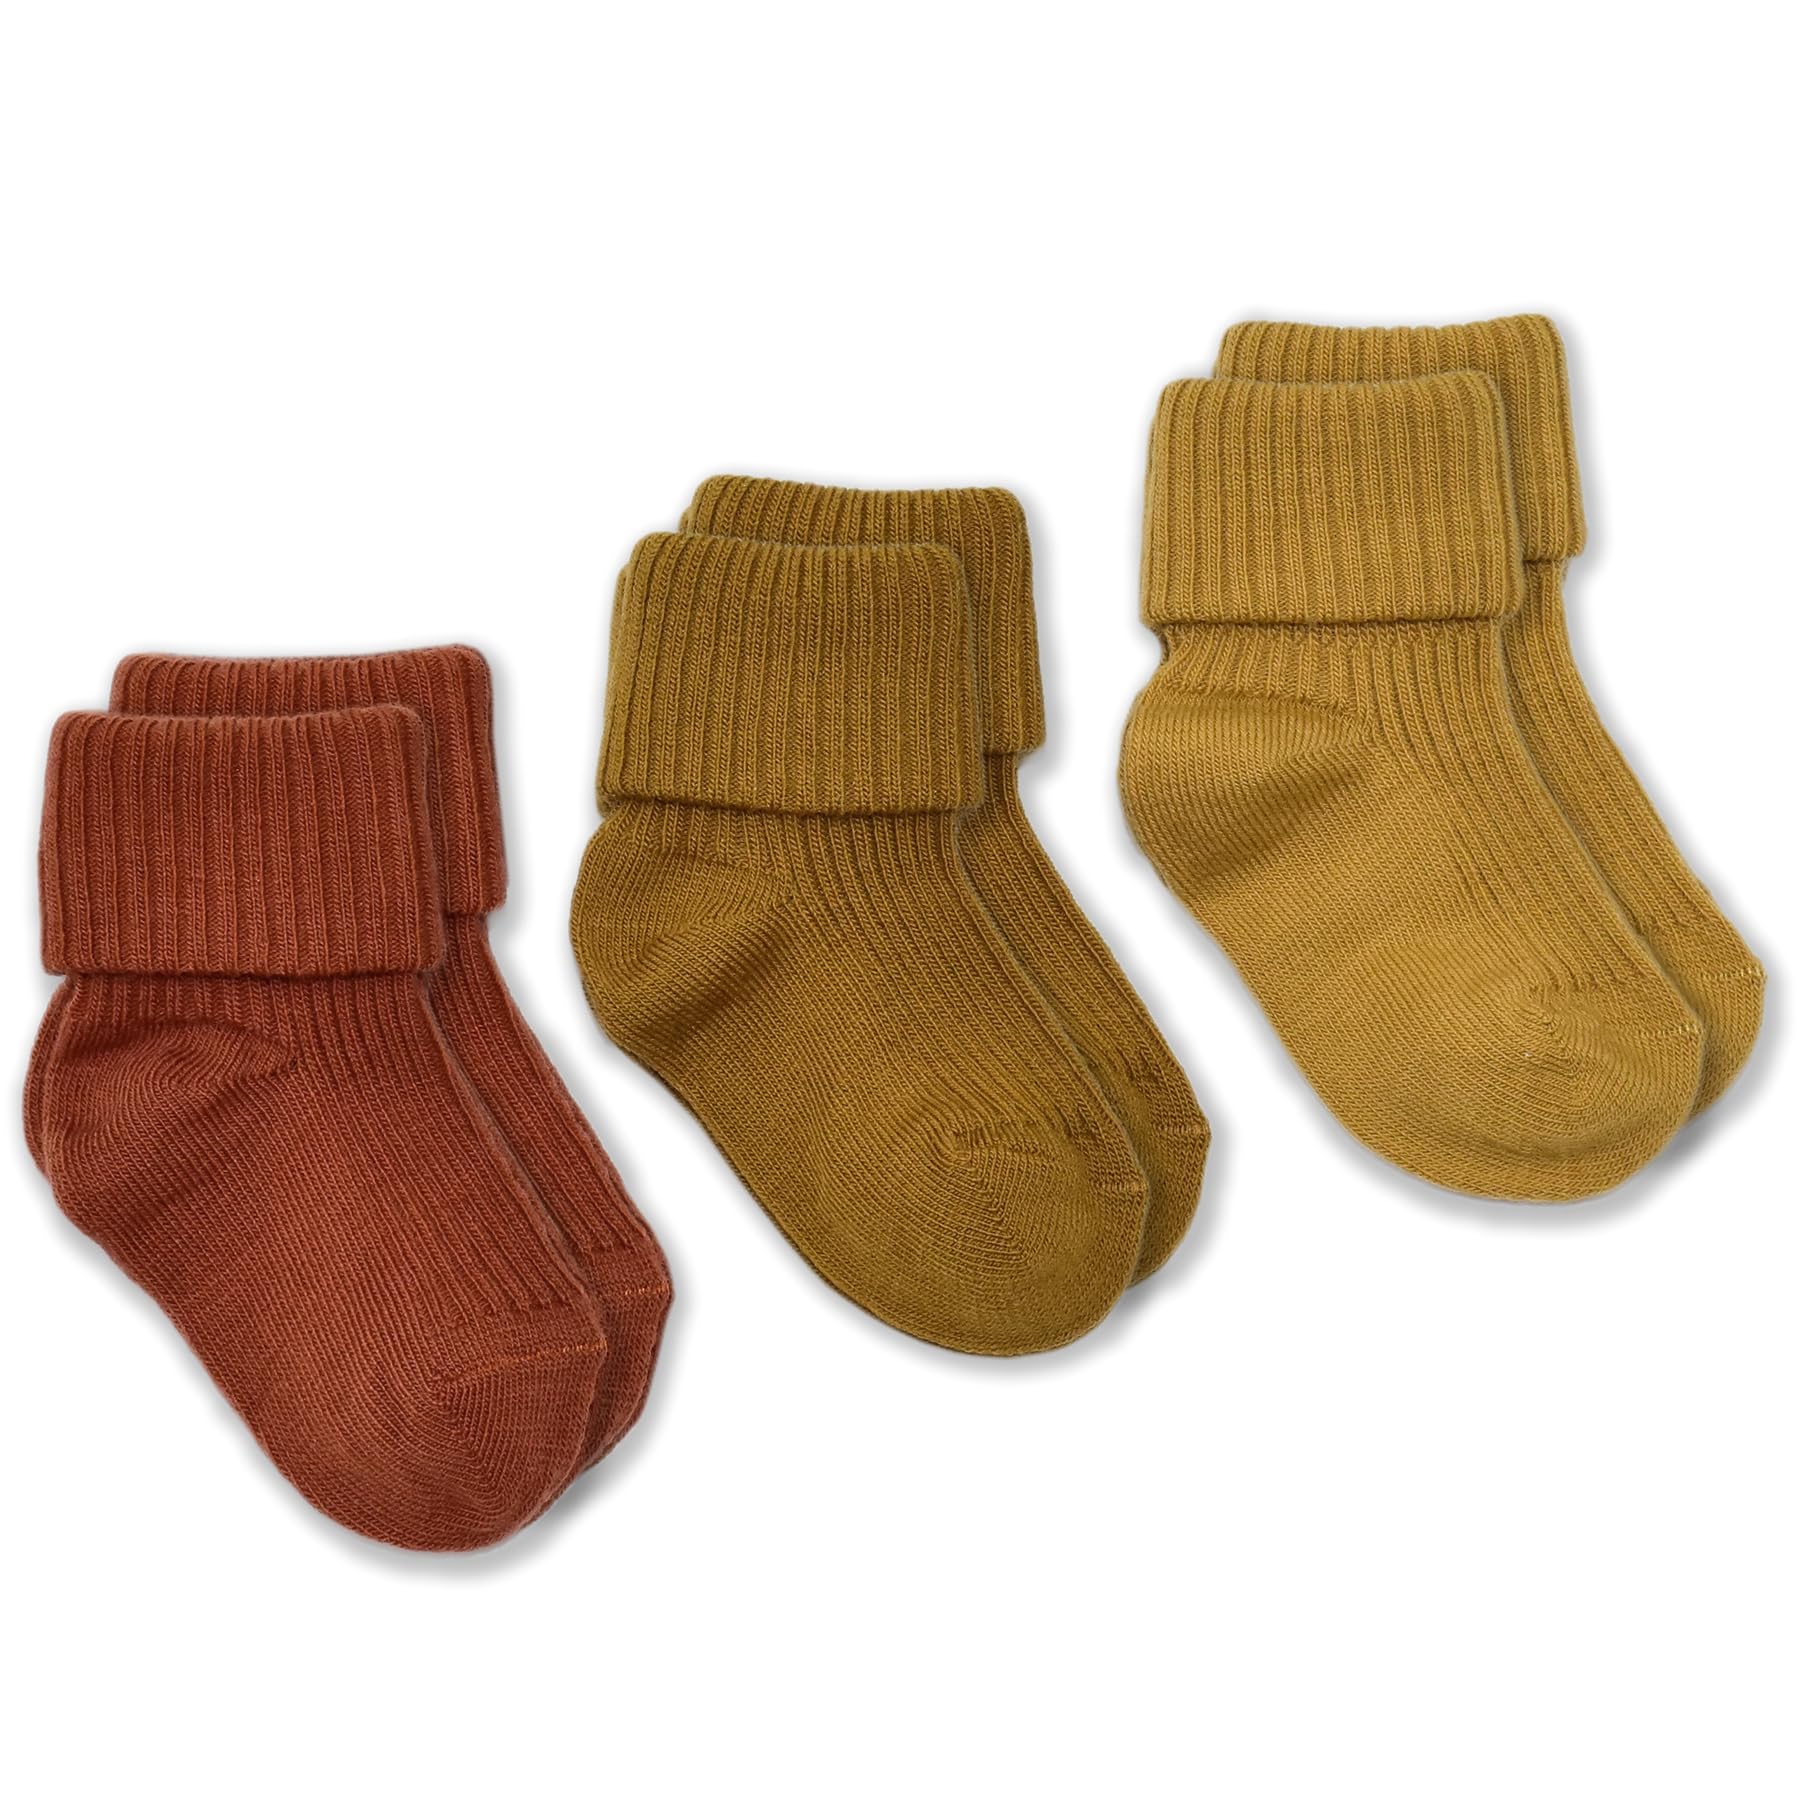 Woolino Wool Baby Socks, Washable Merino Wool Infant Toddler Kids Socks, Newborn to 8 Years (Pack of 3)